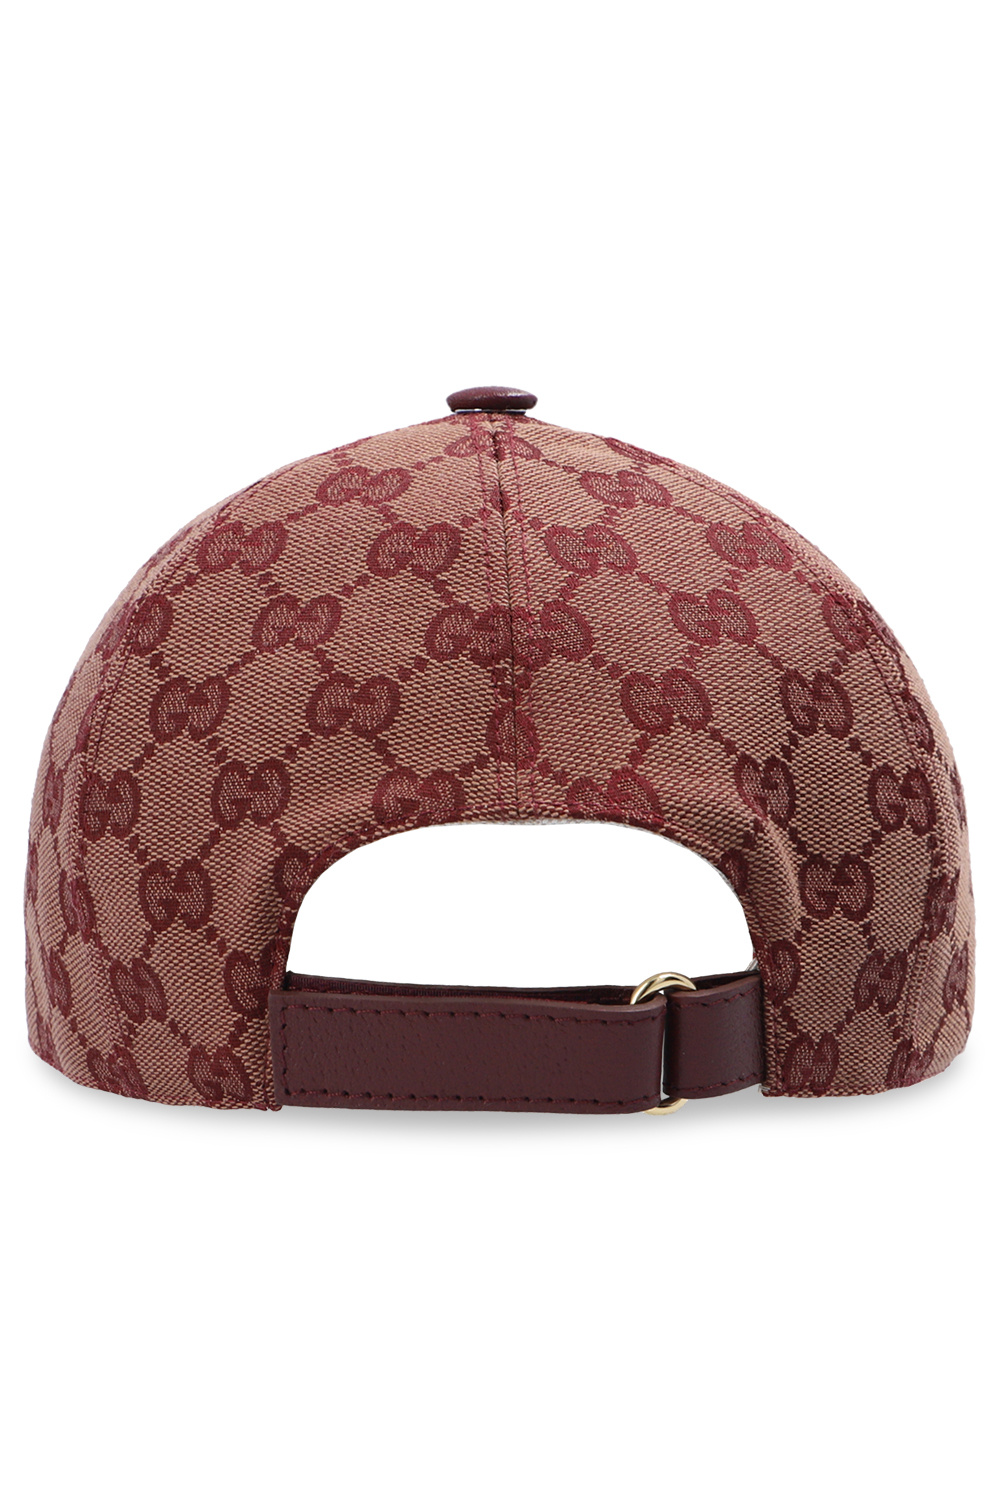 Gucci GG Canvas Baseball Cap - Brown Hats, Accessories